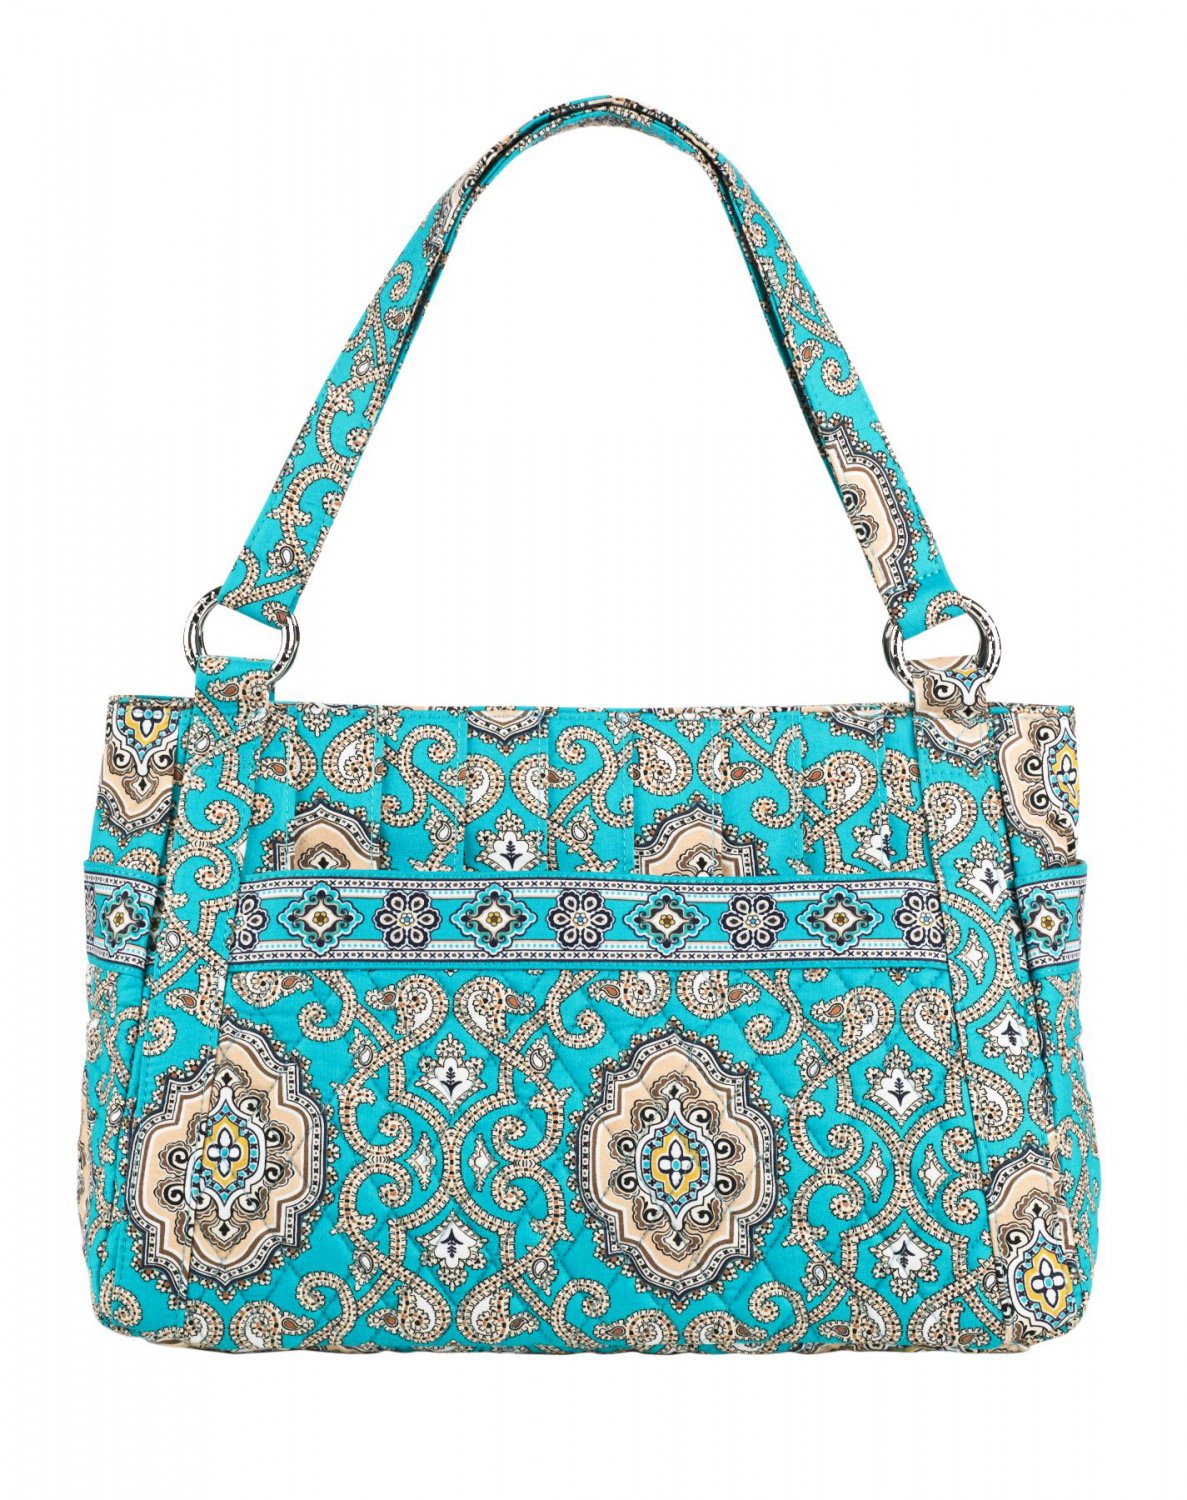 Vera Bradley Purse Handbag Hand Bag Stephanie Totally Turquoise $68 NEW